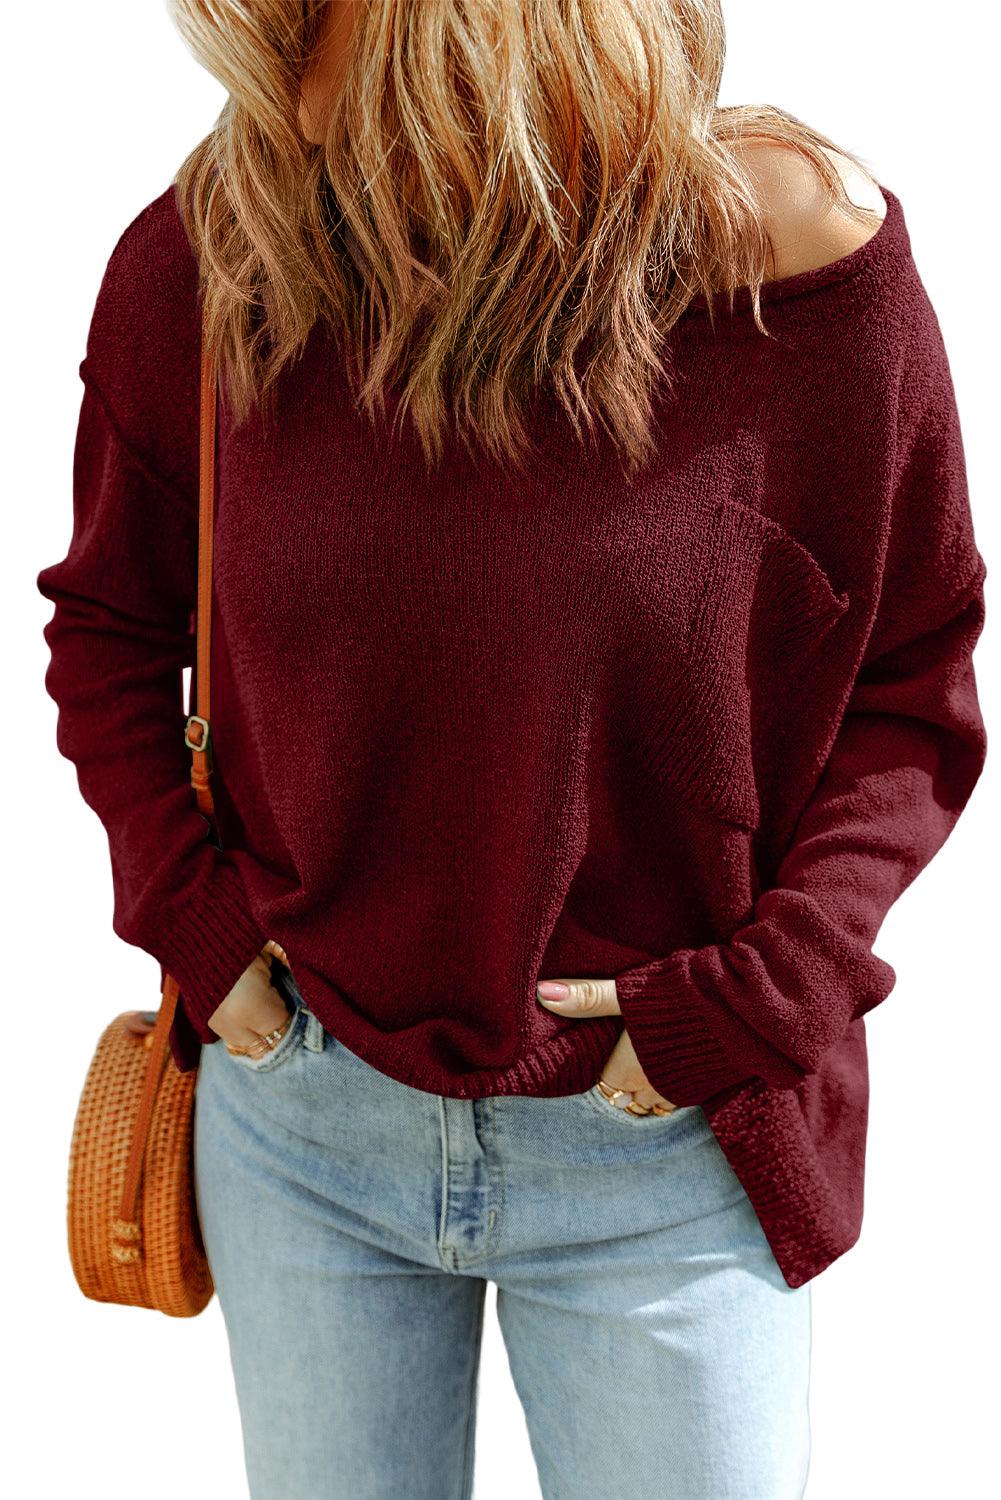 Biking Red Solid Color Off Shoulder Rib Knit Sweater with Pocket - L & M Kee, LLC